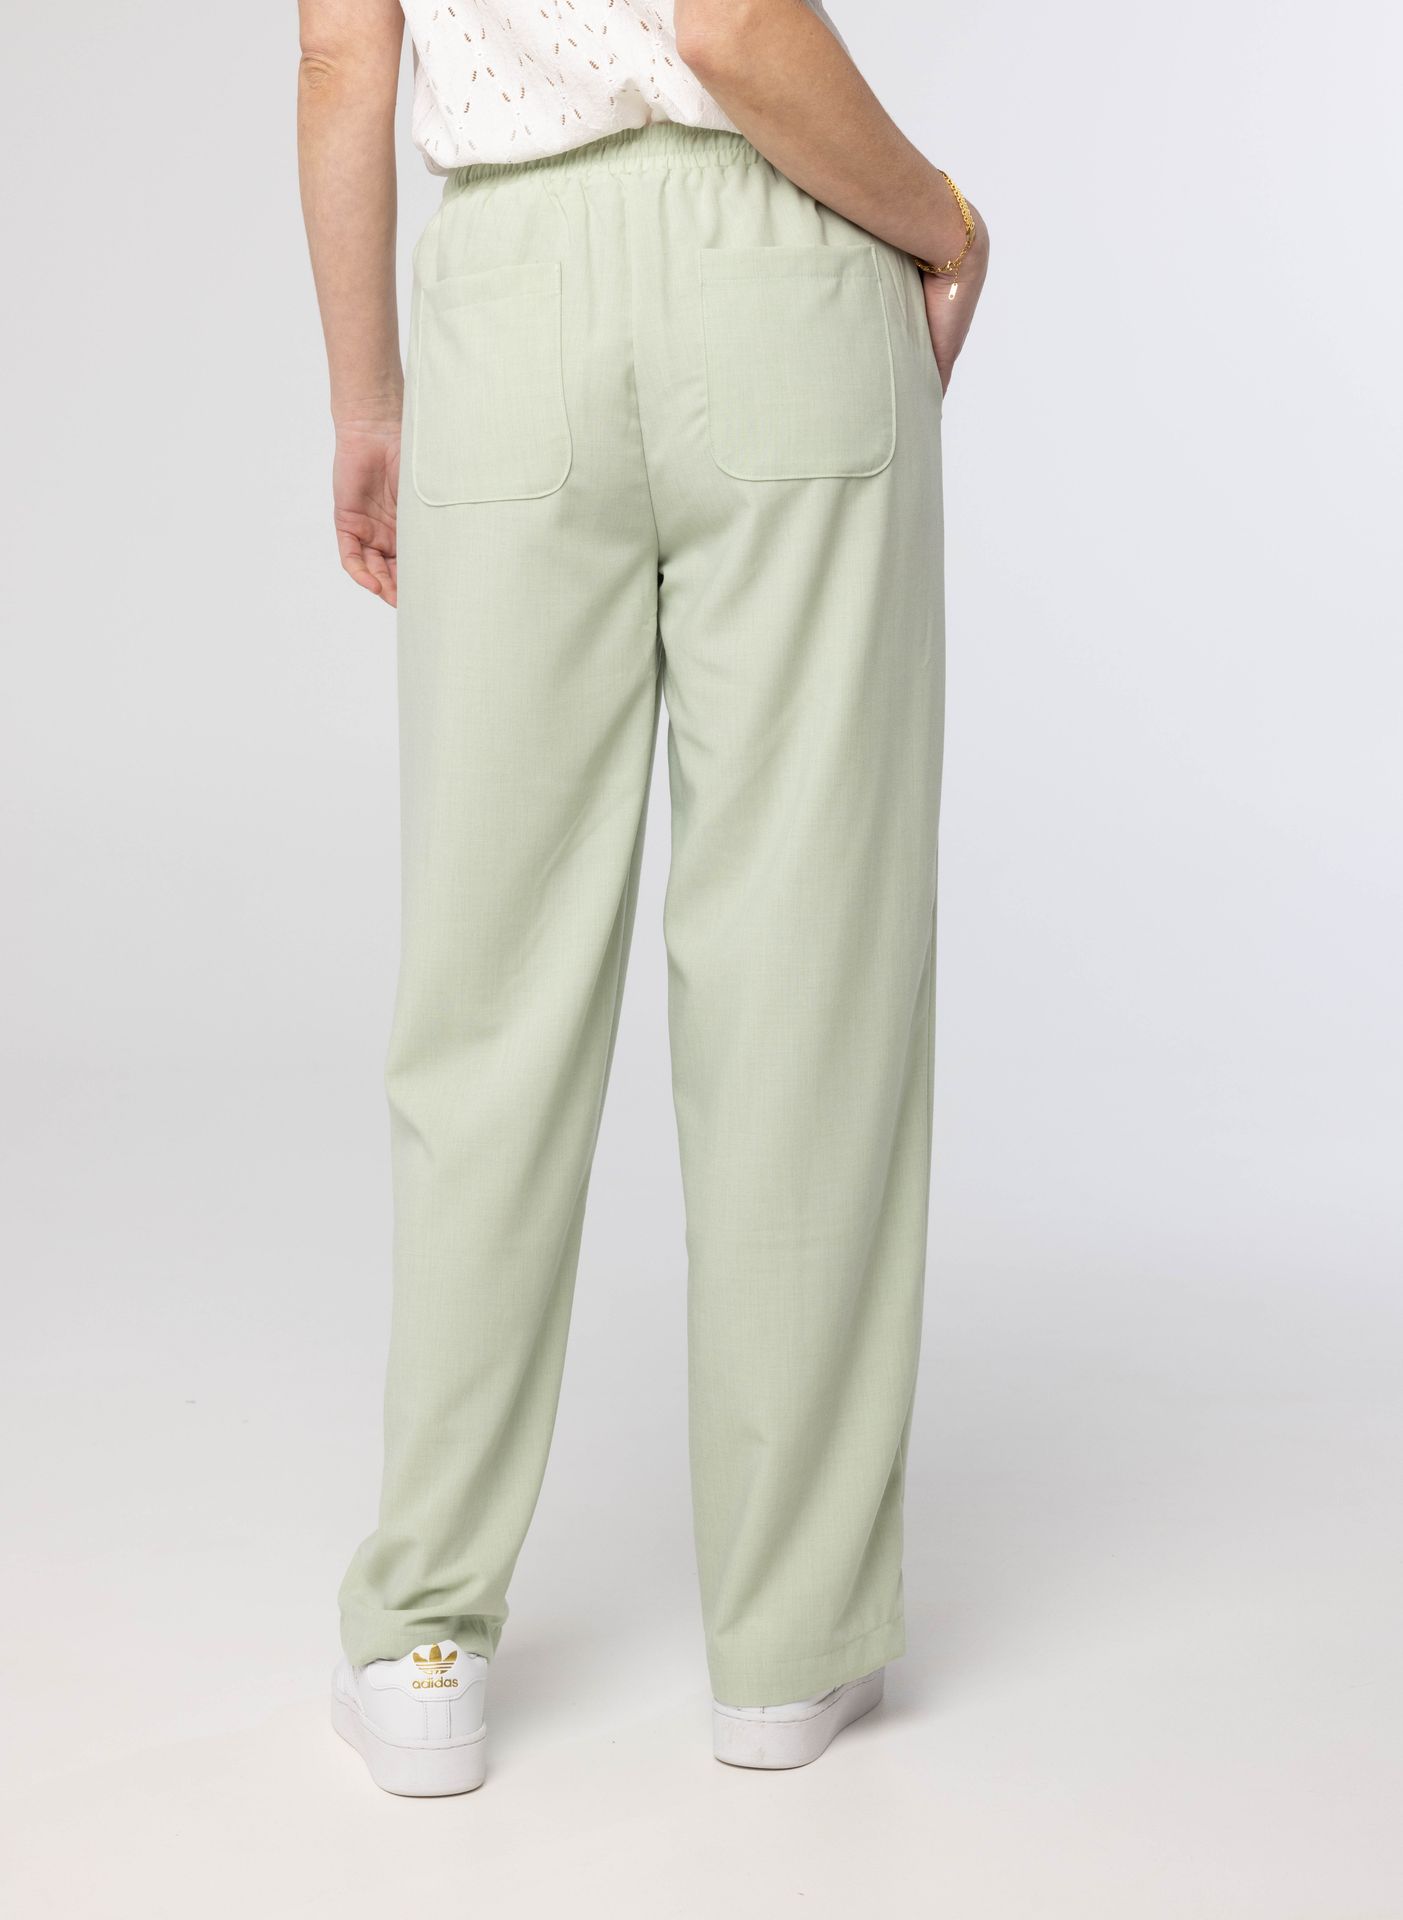 Norah Lichtgroene pantalon green 214391-500